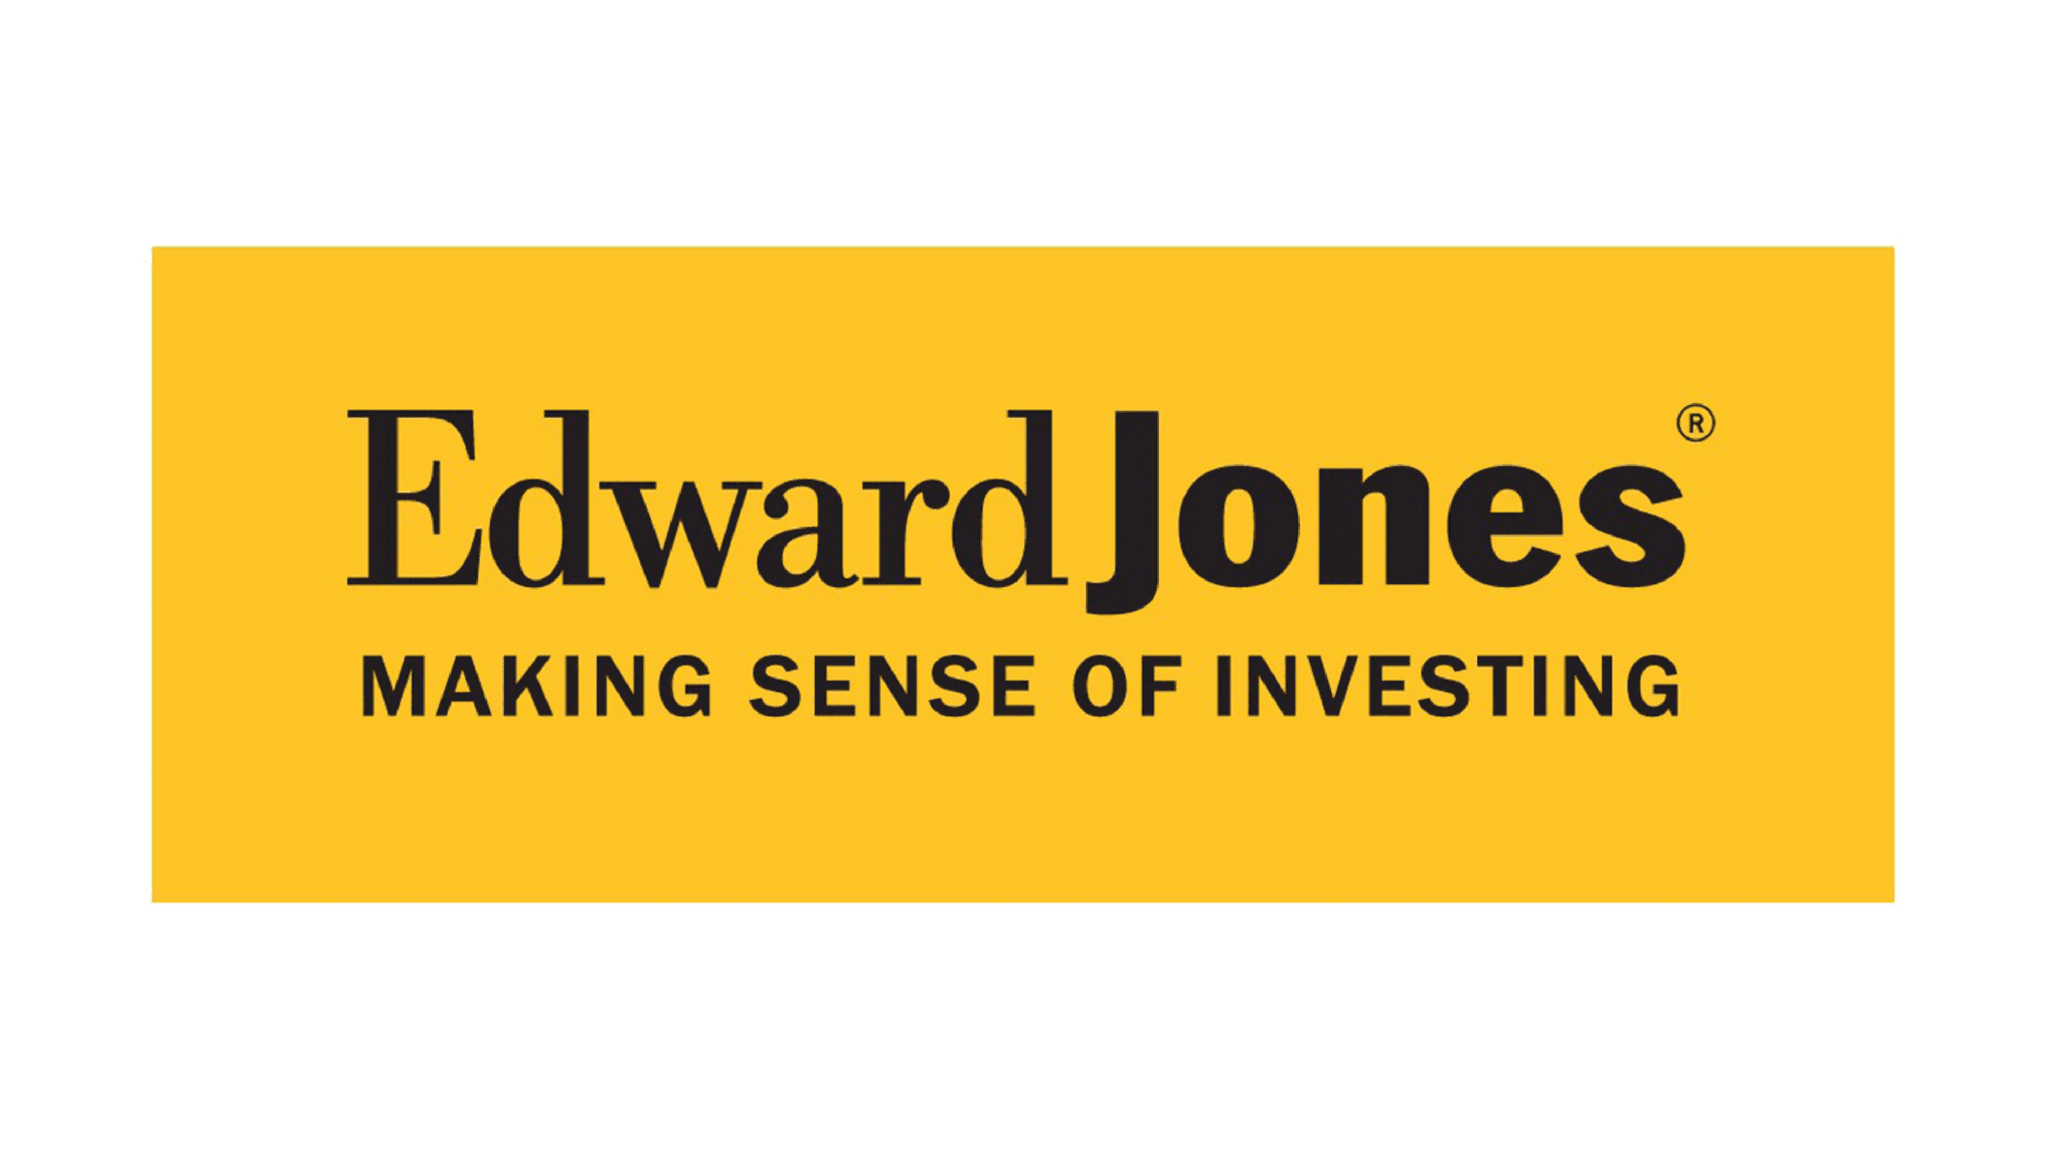 Edward-Jones-logo